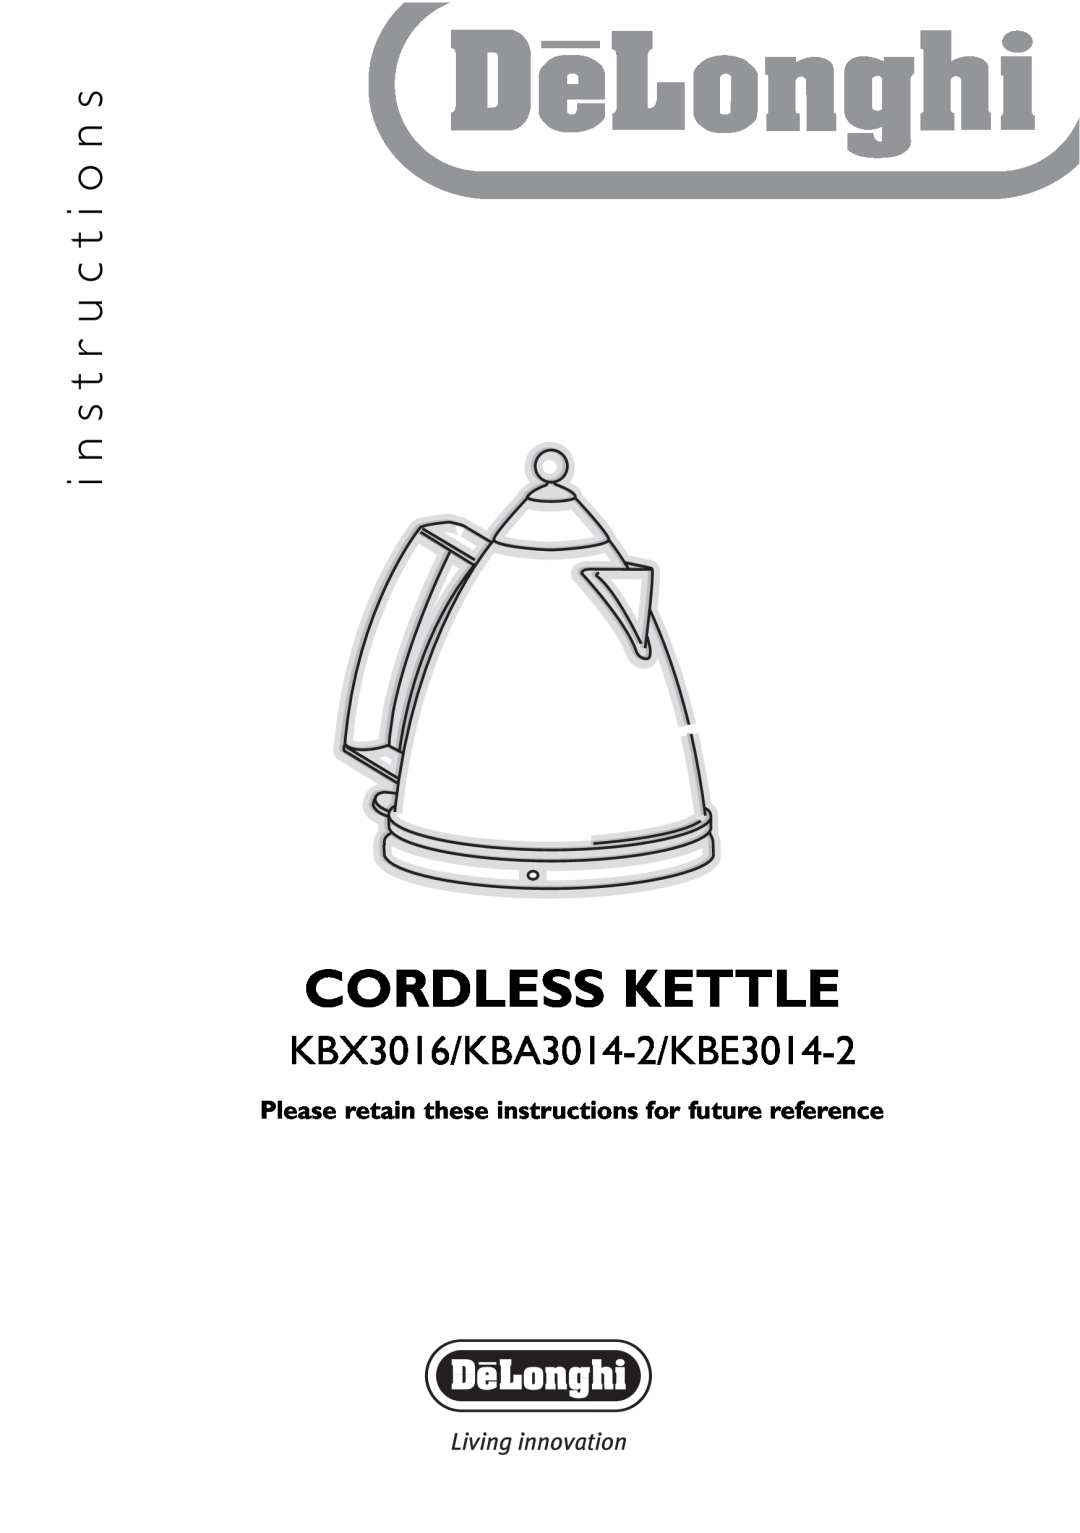 DeLonghi manual Cordless Kettle, i n s t r u c t i o n s, KBX3016/KBX3016.C/KBA3014-2/KBE3014-2 